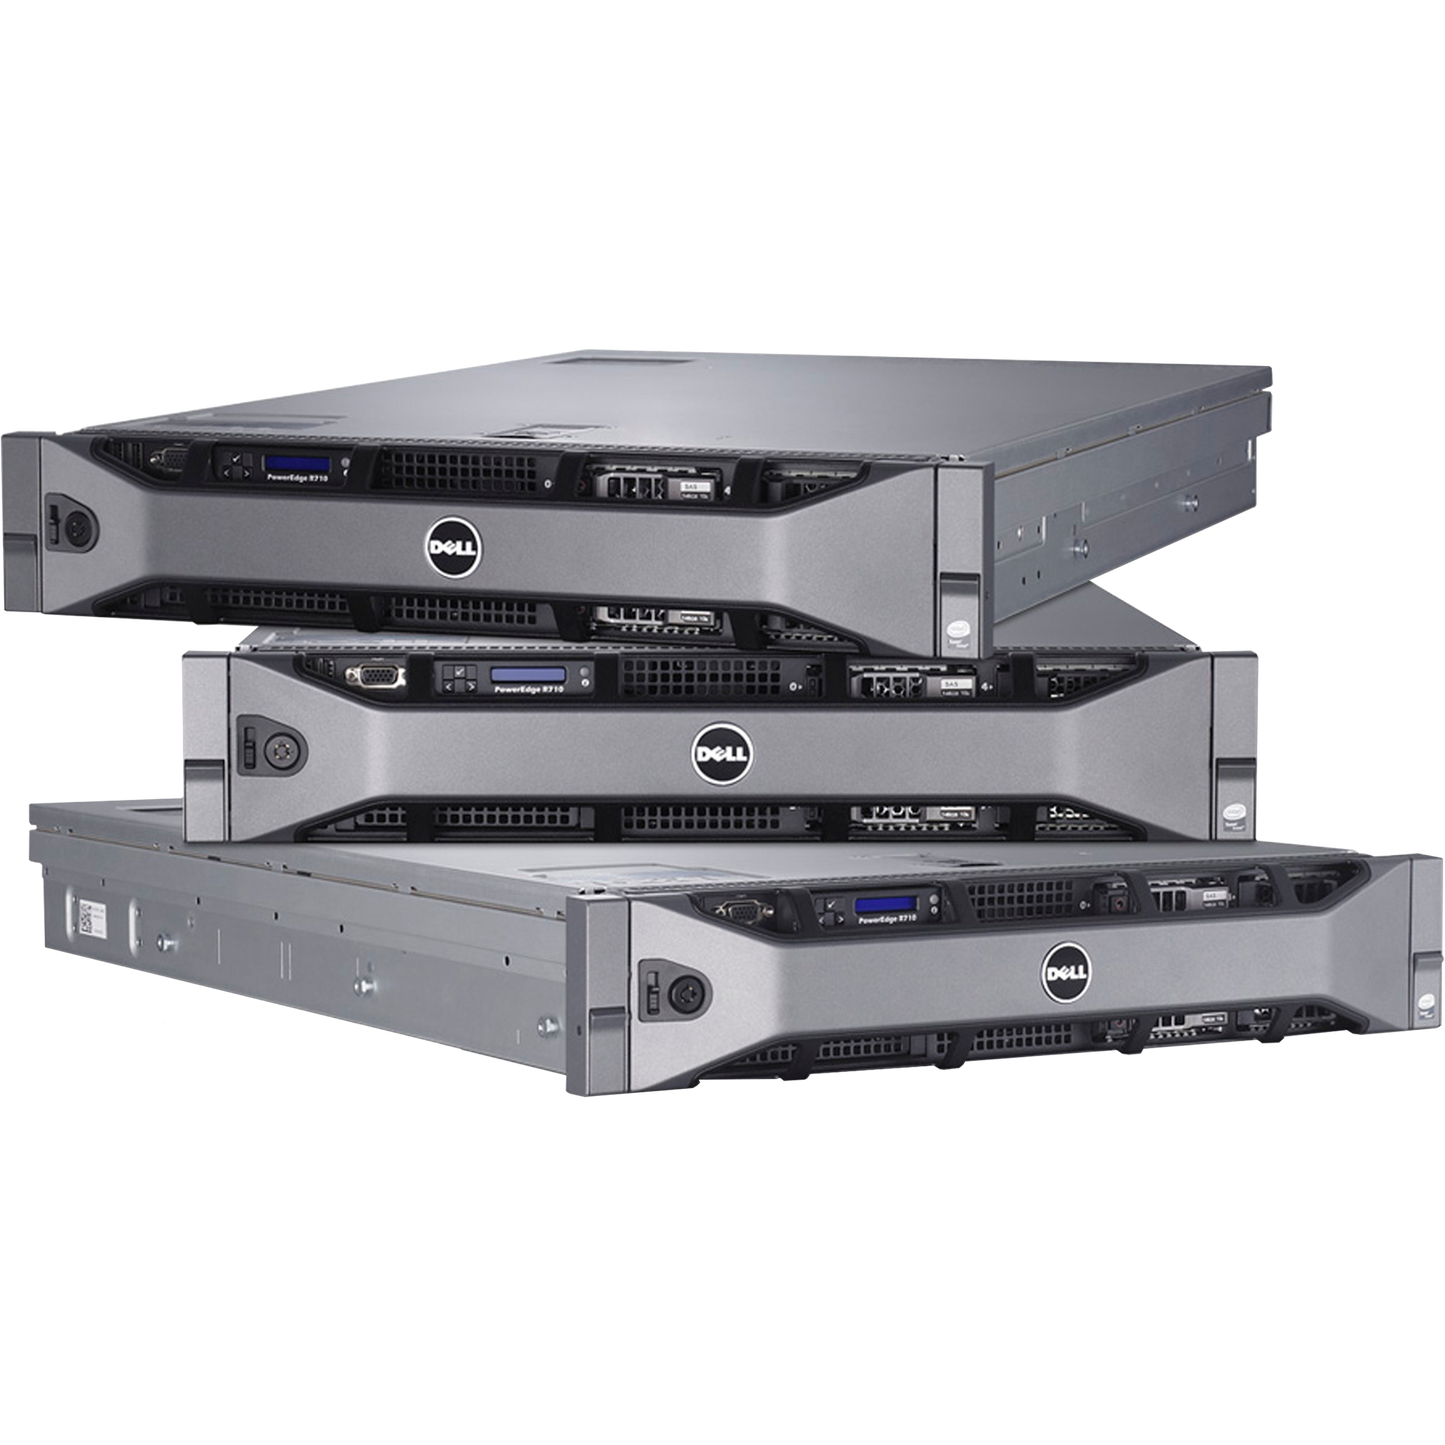 Dell PowerEdge R710 2 x 6 Core Intel Xeon CPU Server - 3.5" Backplane Servers